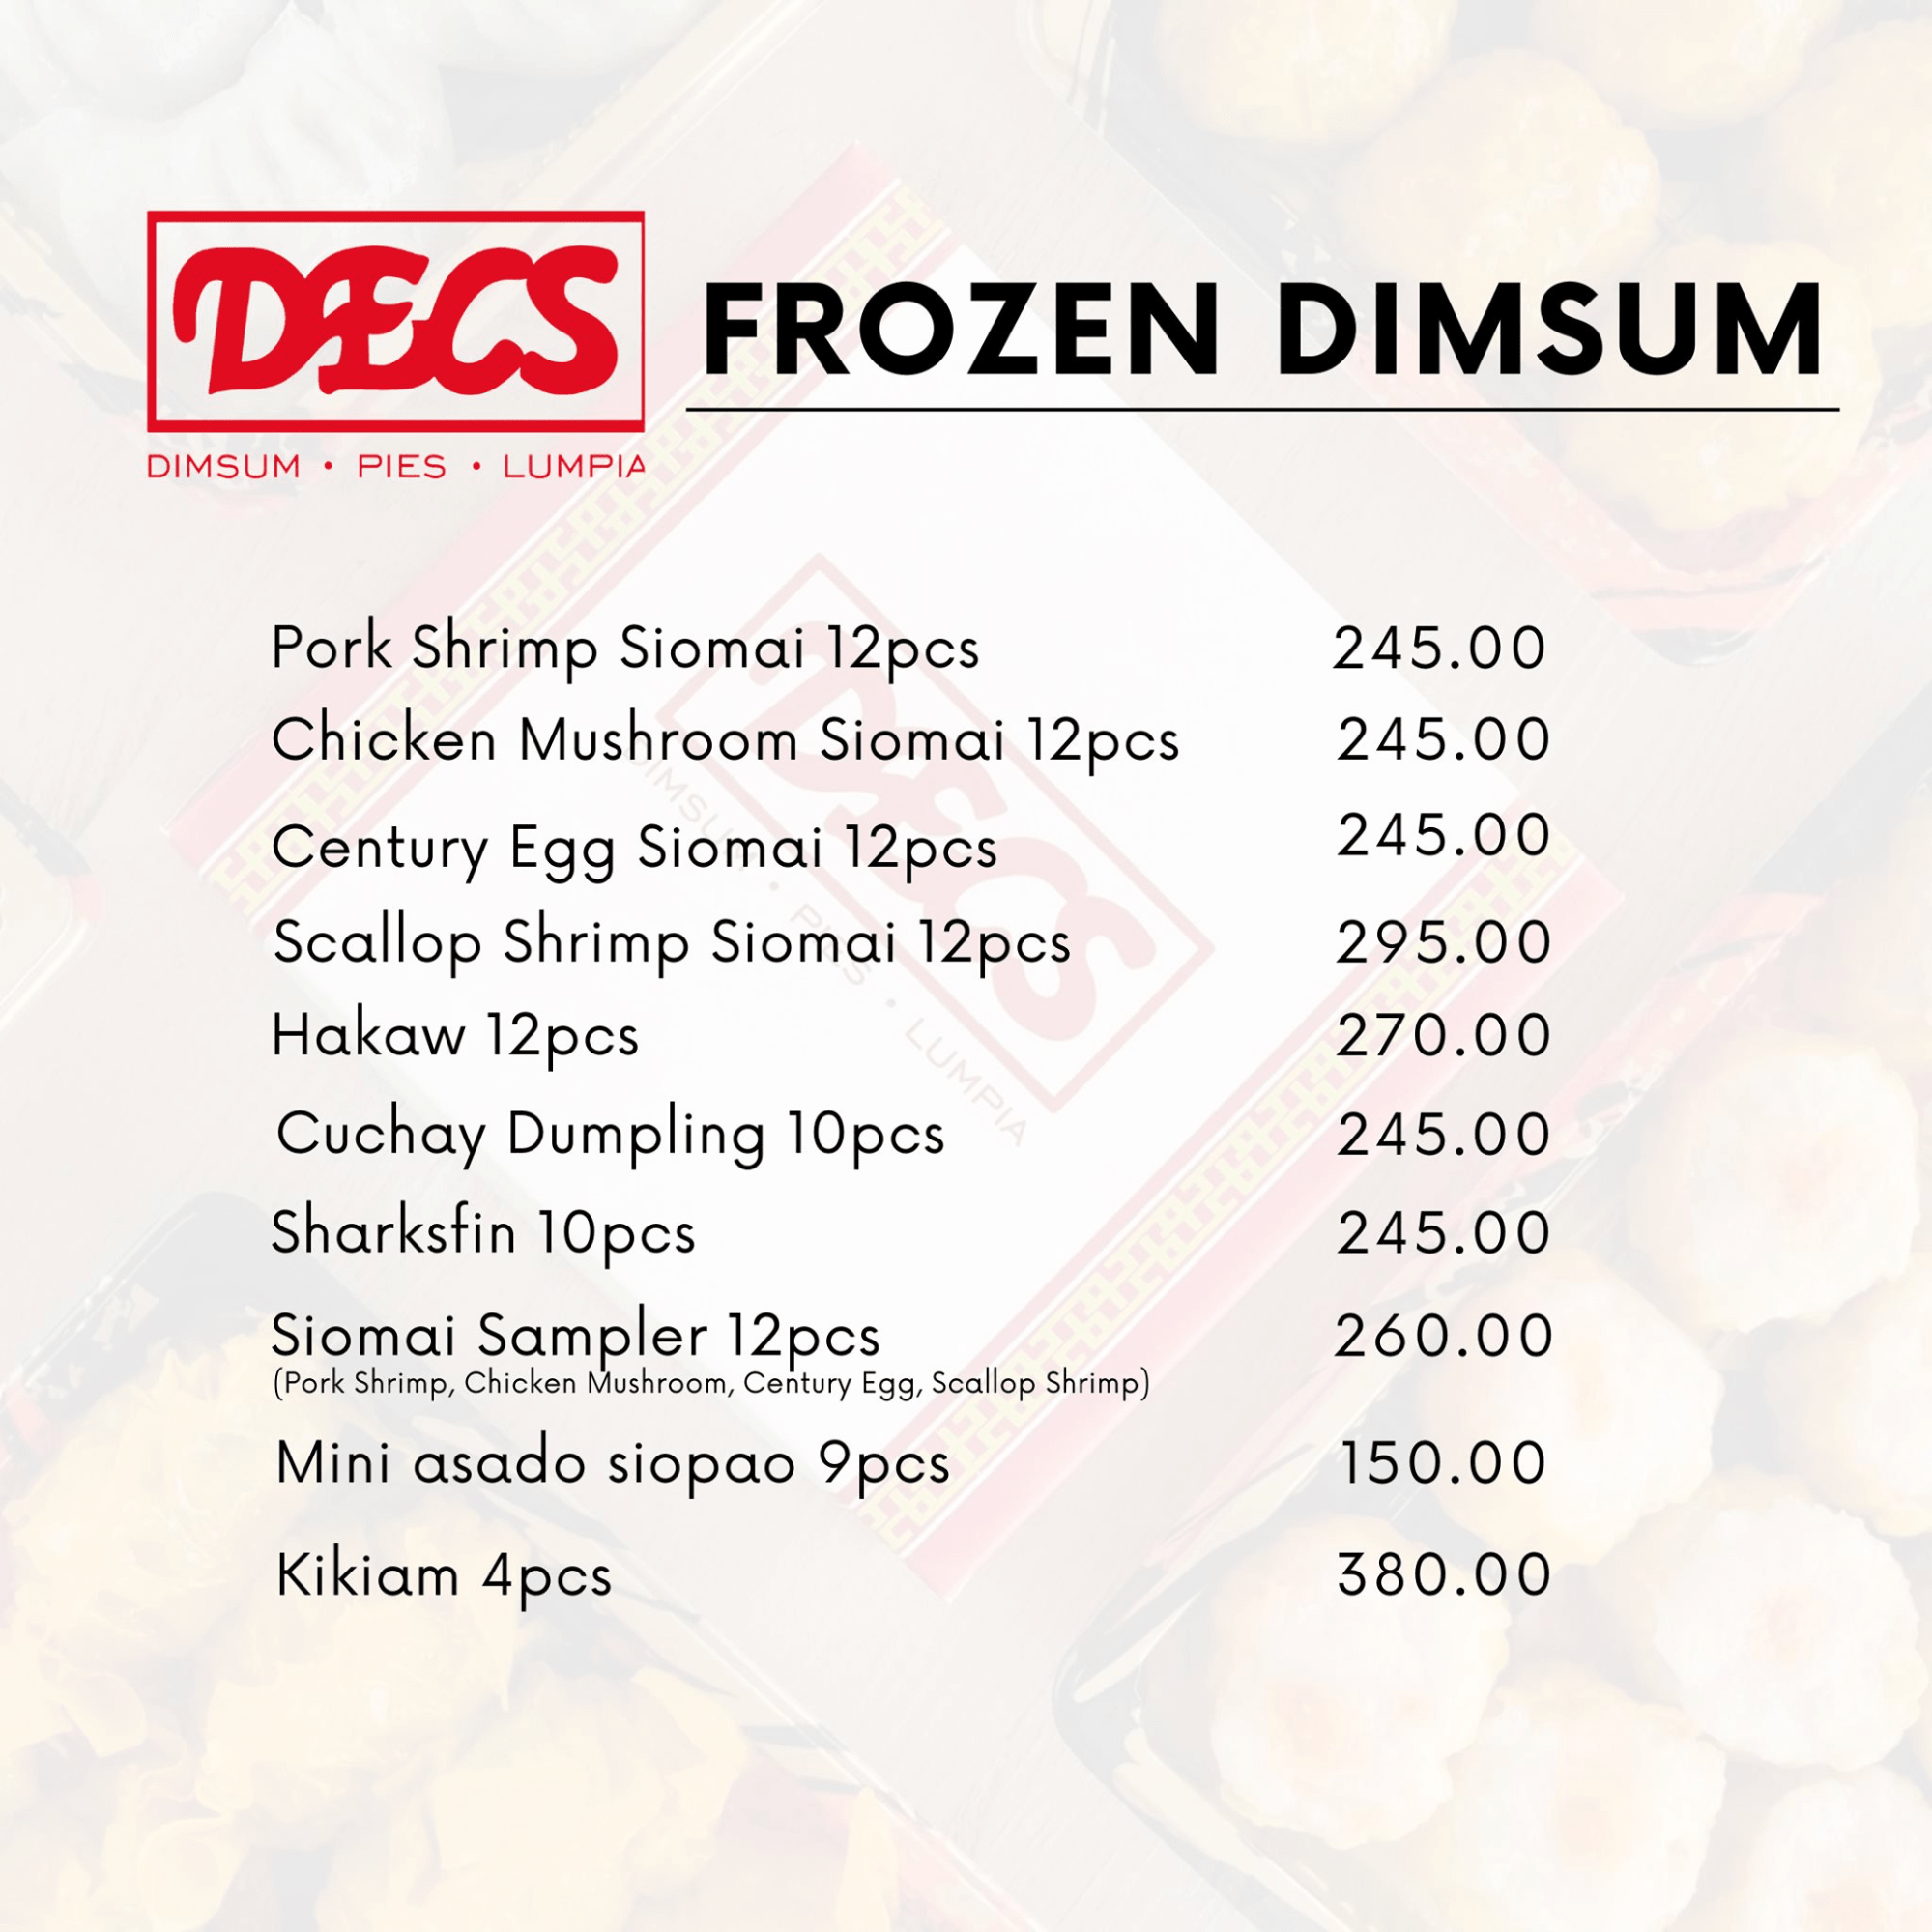 DECS' frozen dim sum menu